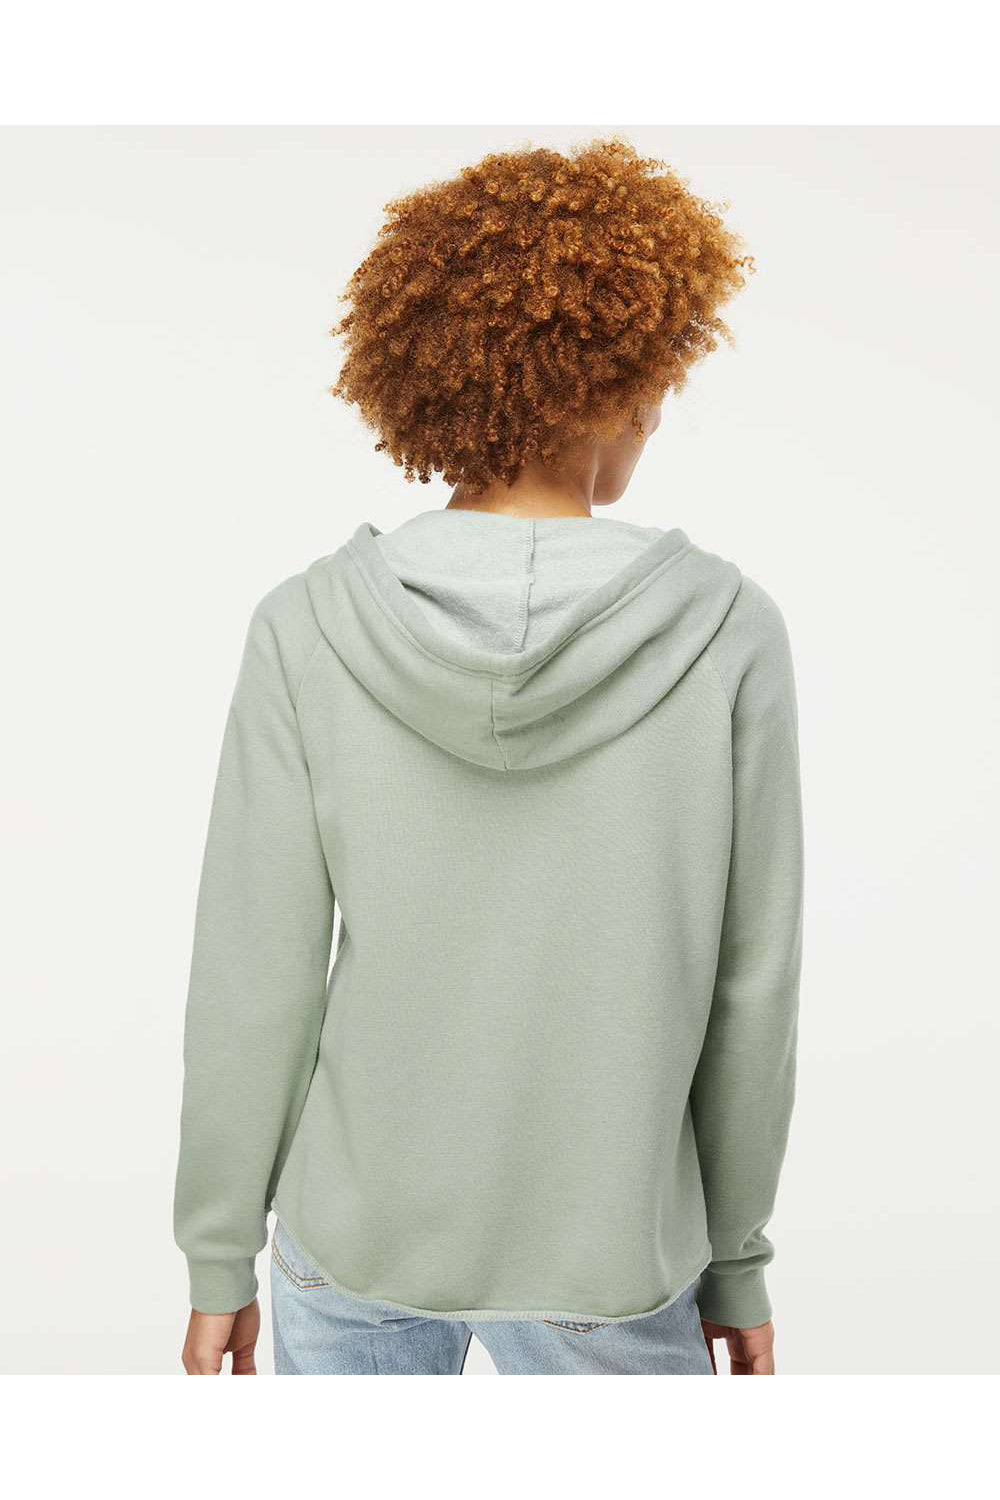 Independent Trading Co. PRM2500Z Womens California Wave Wash Full Zip Hooded Sweatshirt Hoodie Sage Green Model Back